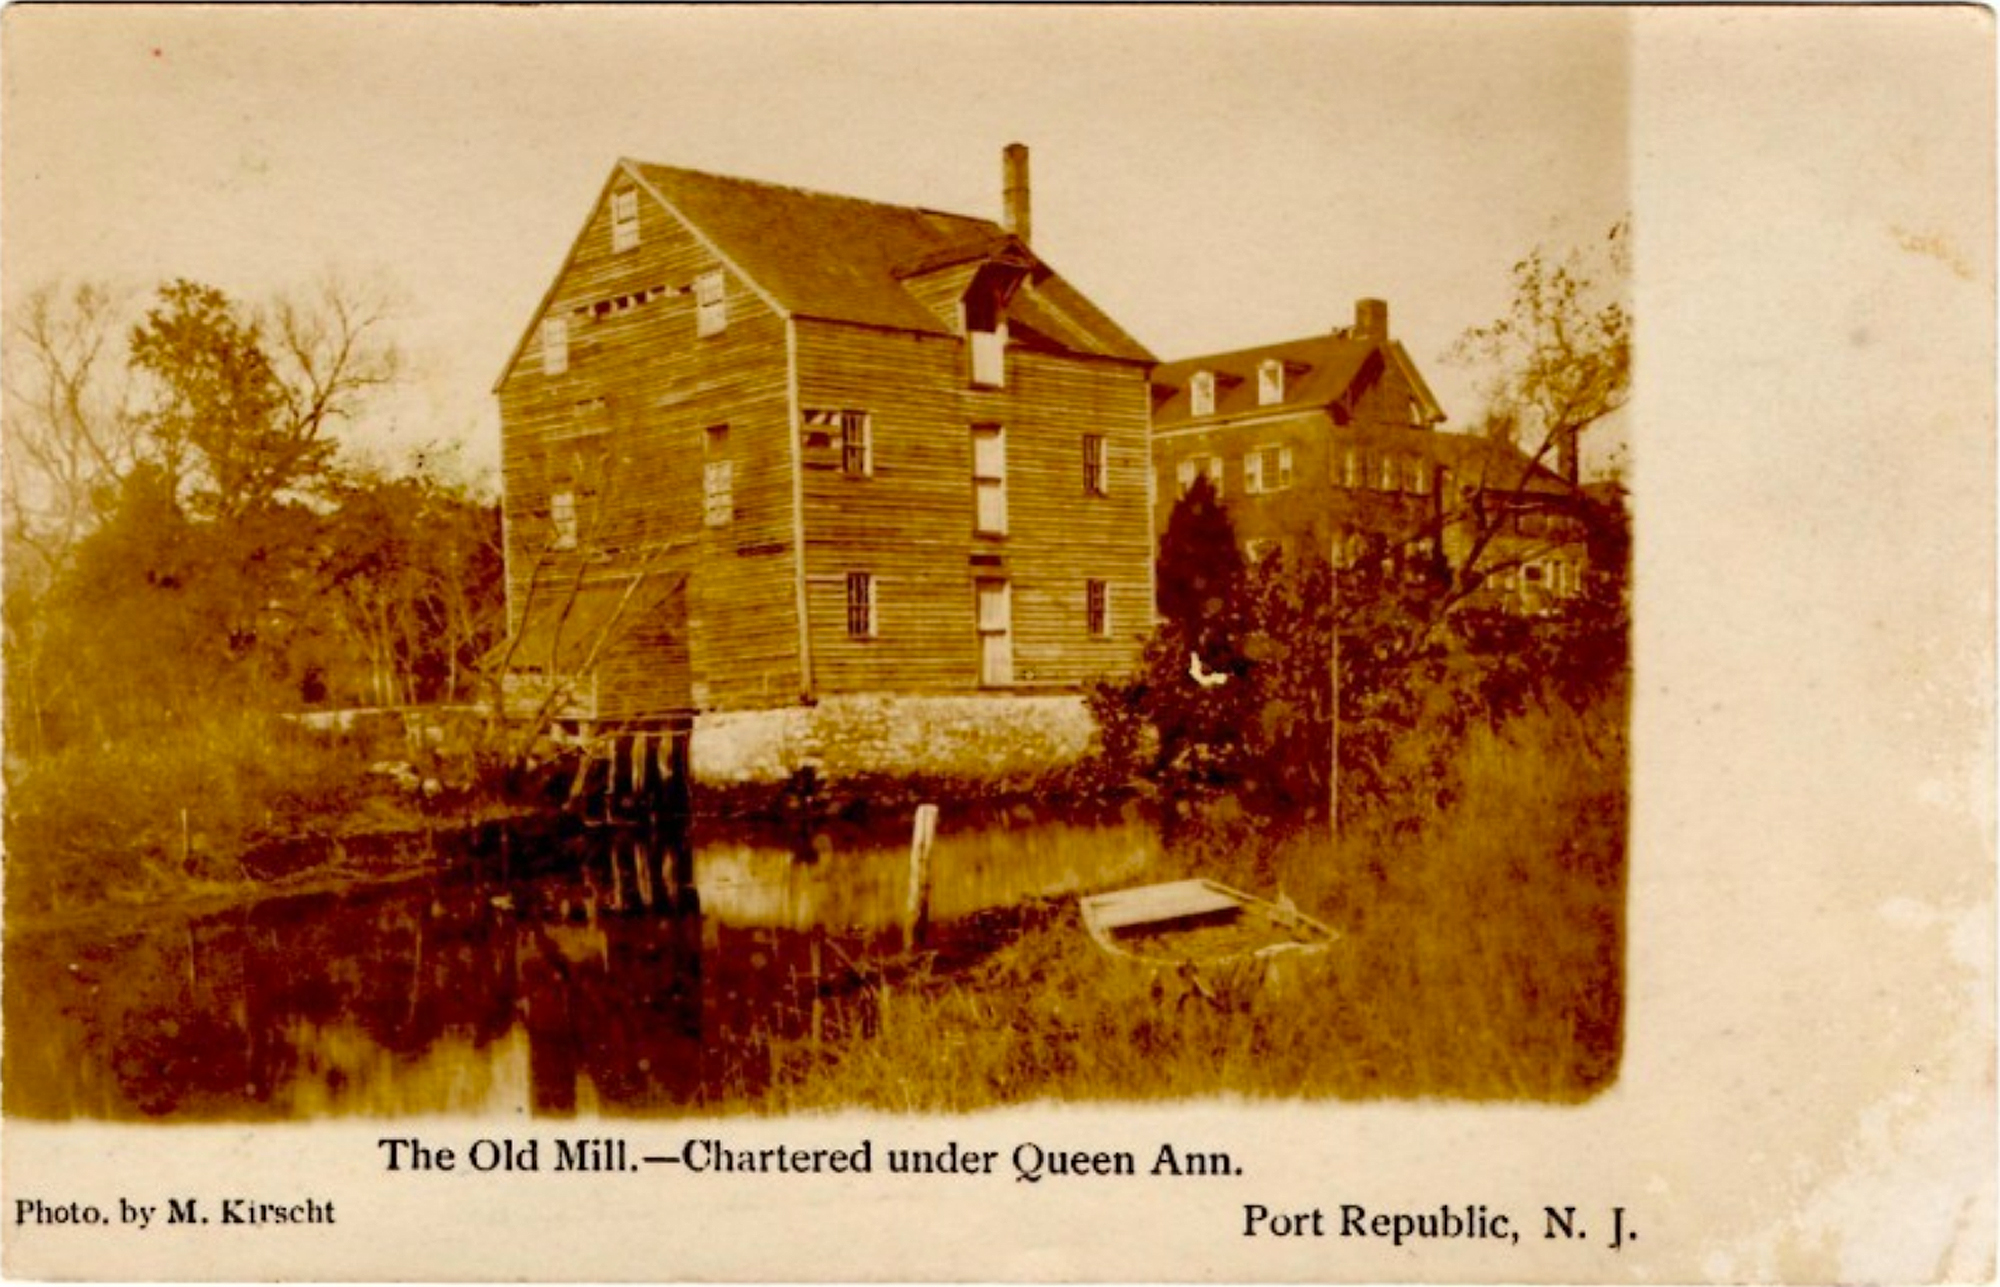 Port Republic - The Old Mill - Max Krscht - 1907